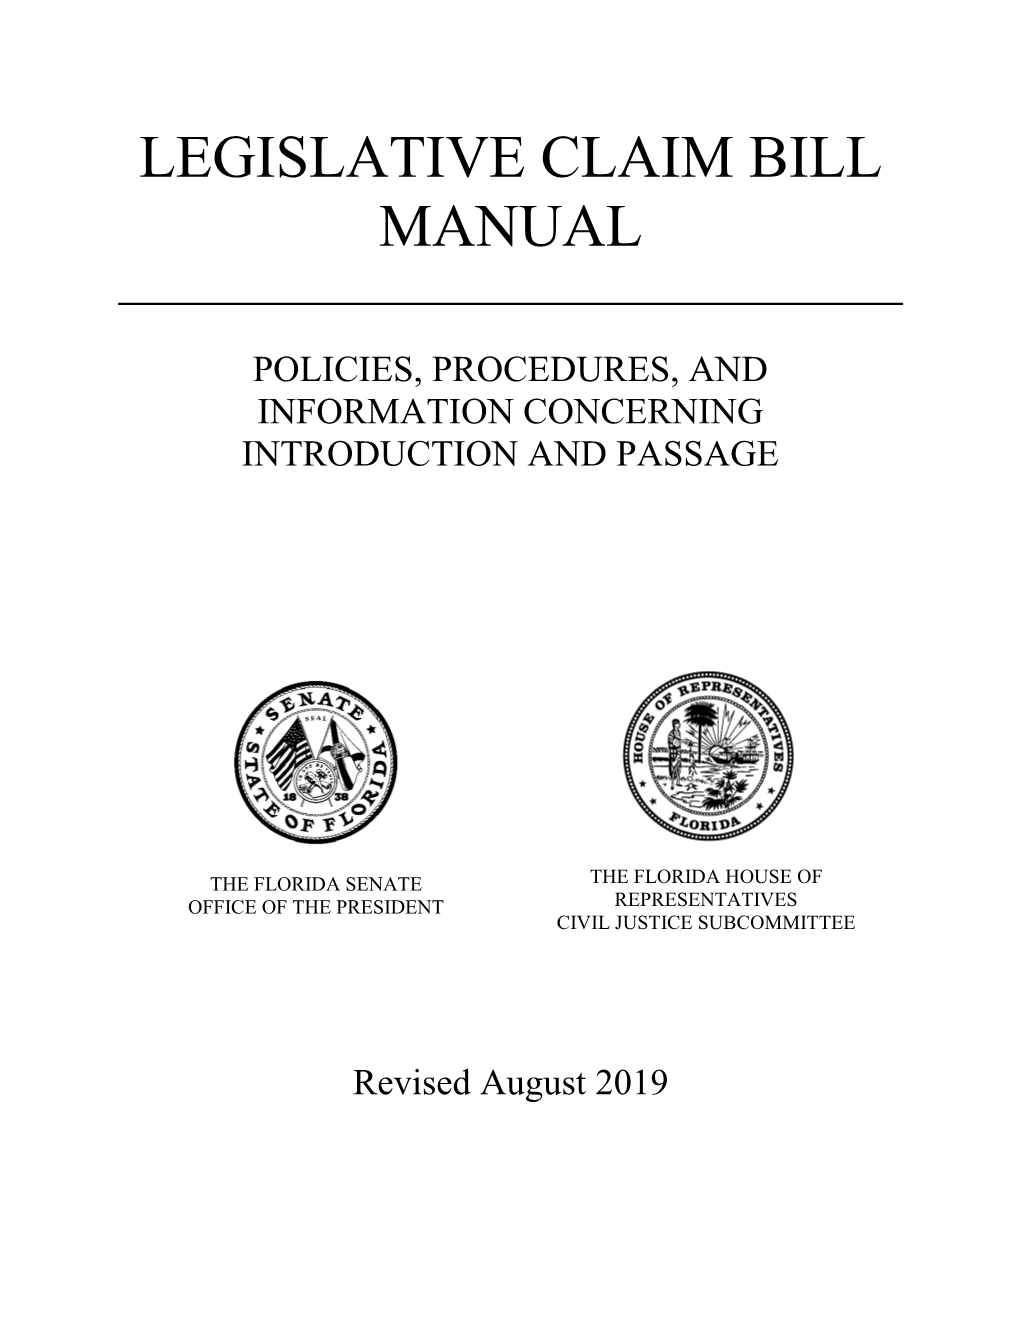 Legislative Claim Bill Manual